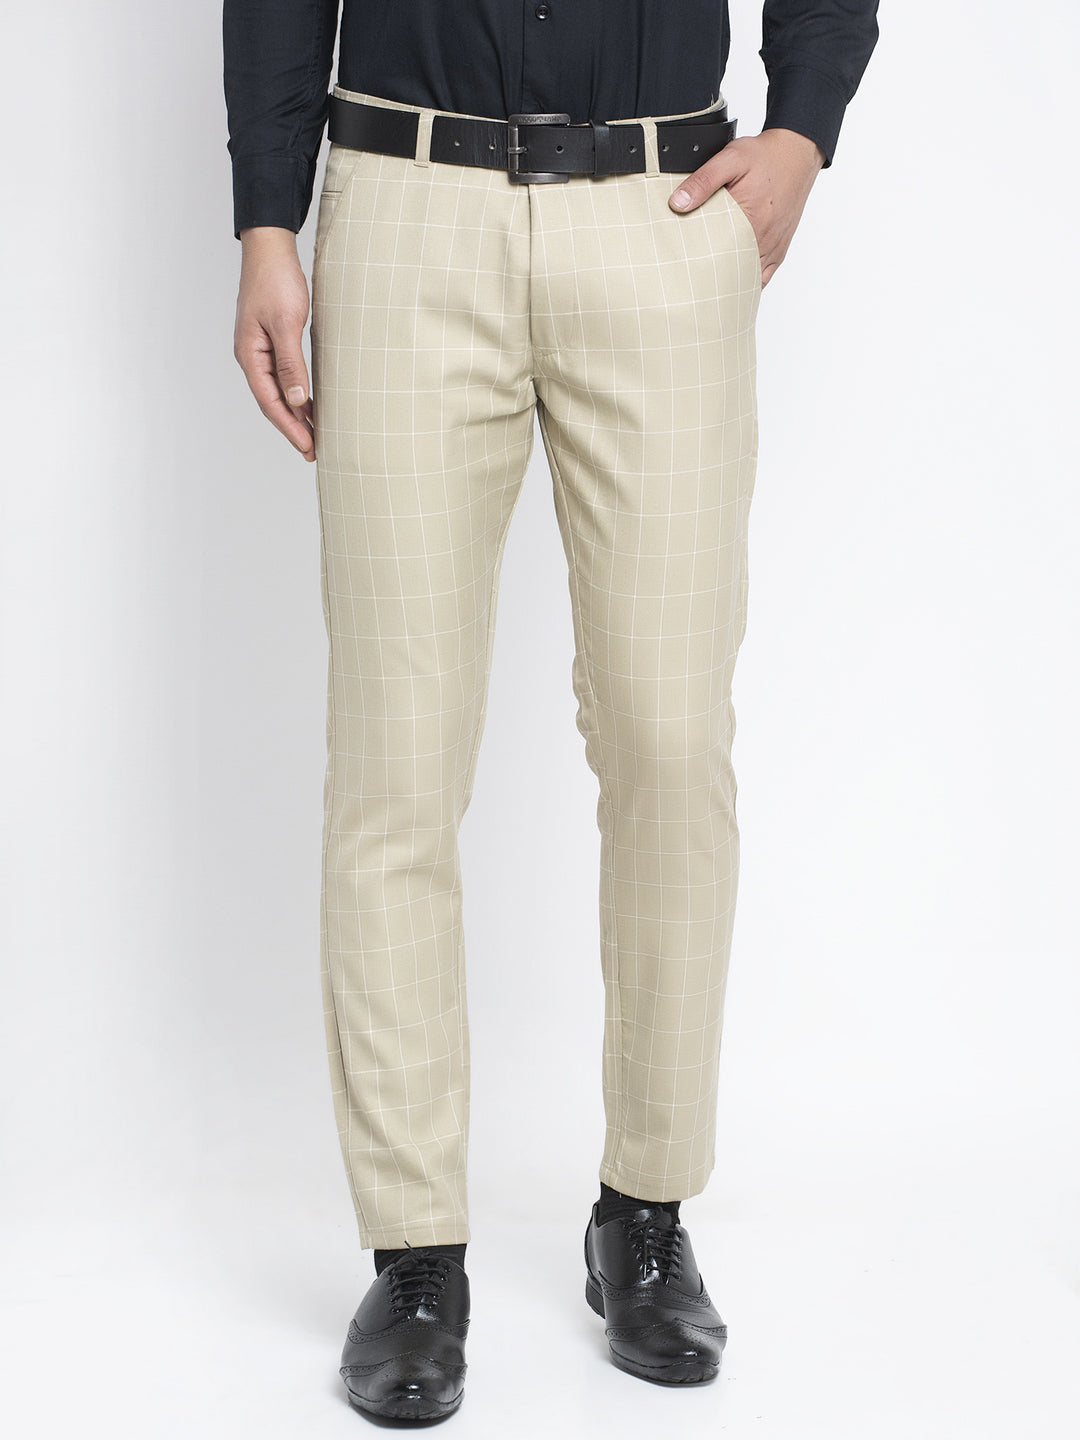 Men's Trousers | Smart & Casual Pants | Percival Menswear